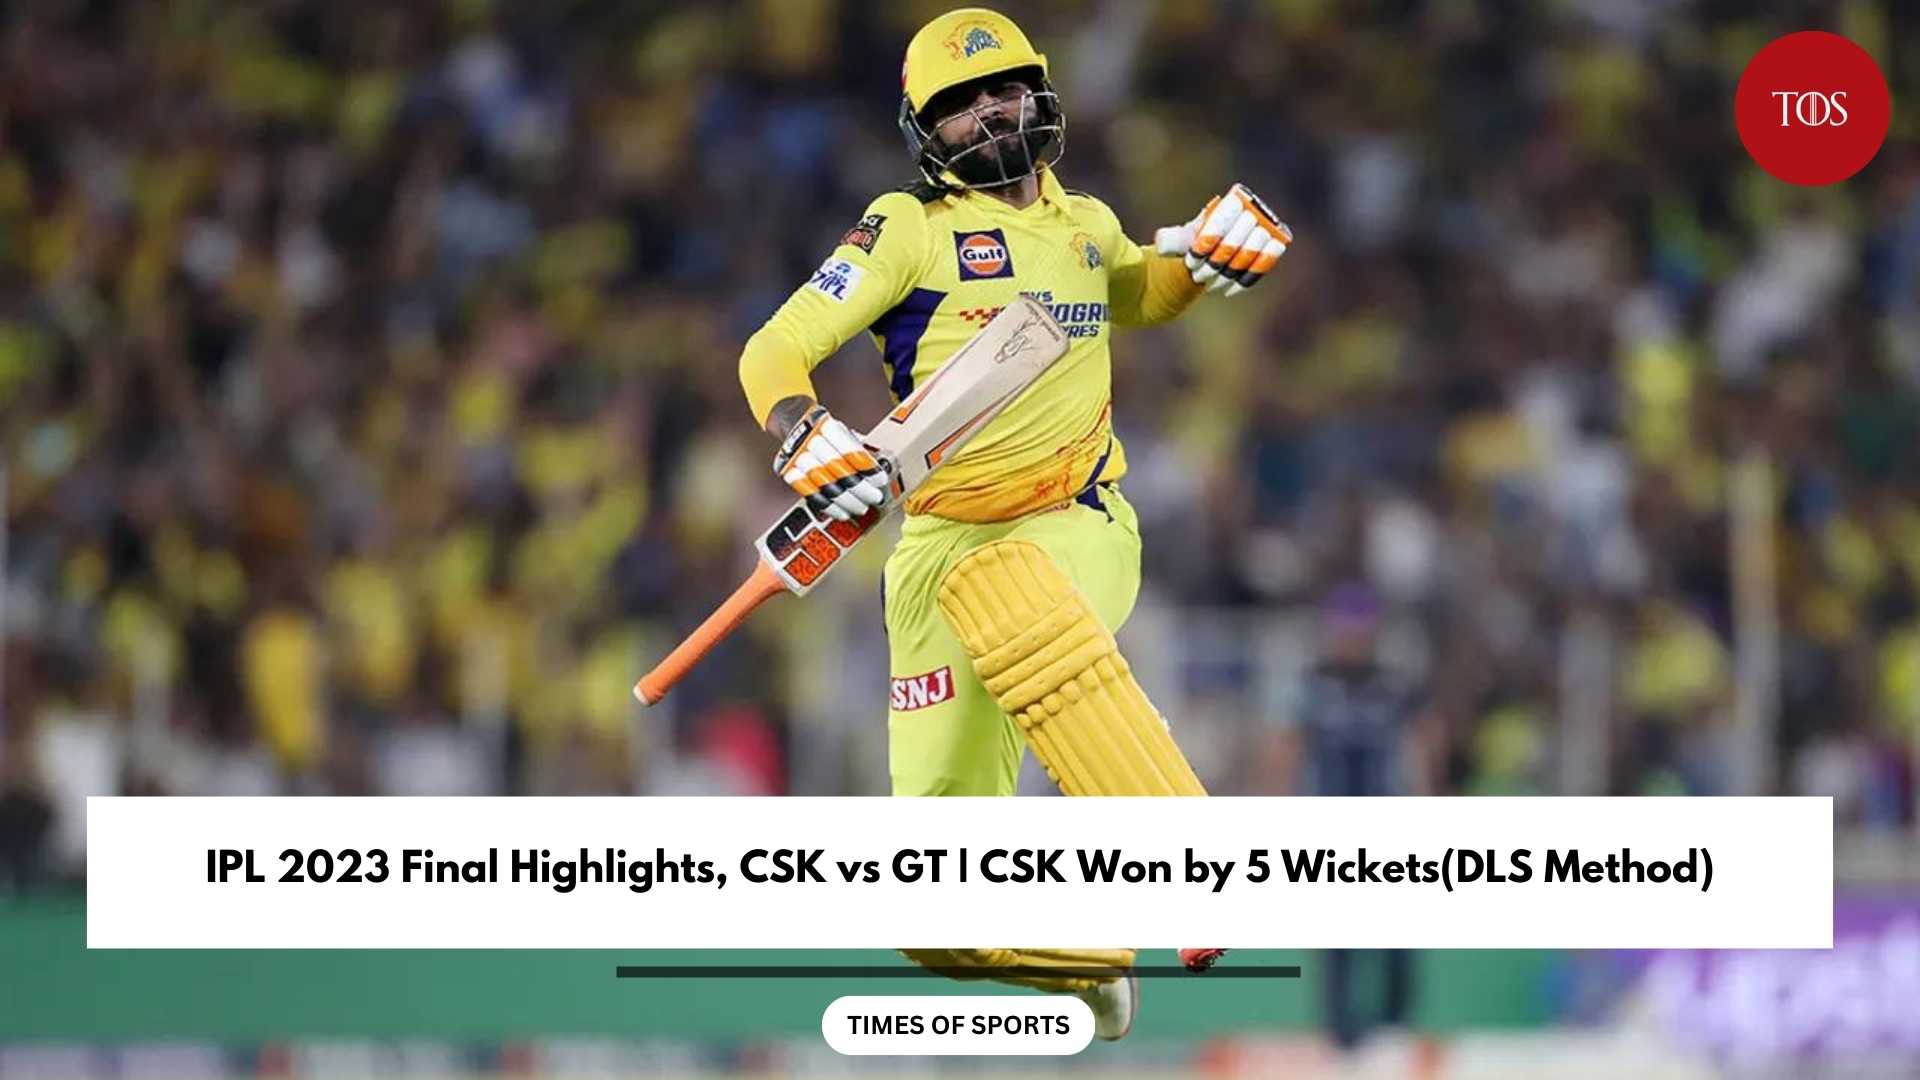 IPL 2023 Final Highlights, CSK vs GT CSK Won by 5 Wickets(DLS Method)